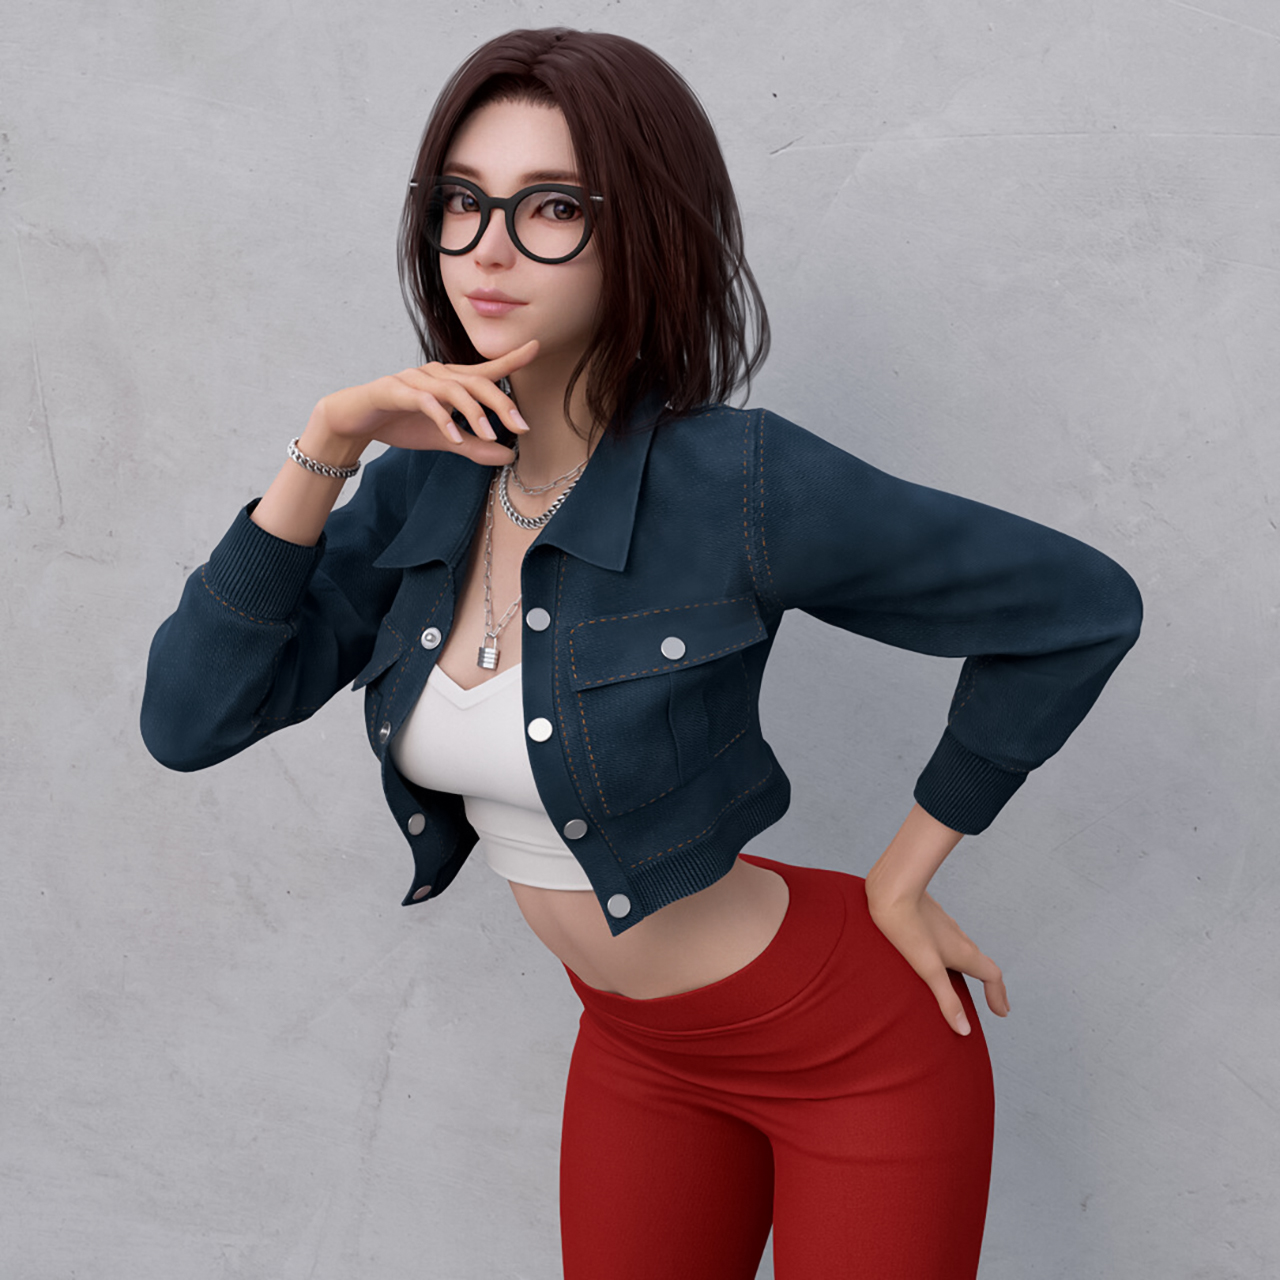 Shin JeongHo CGi Women Brunette Glasses Jacket Red Clothing Pants Jewelry Silver Simple Background 1280x1280